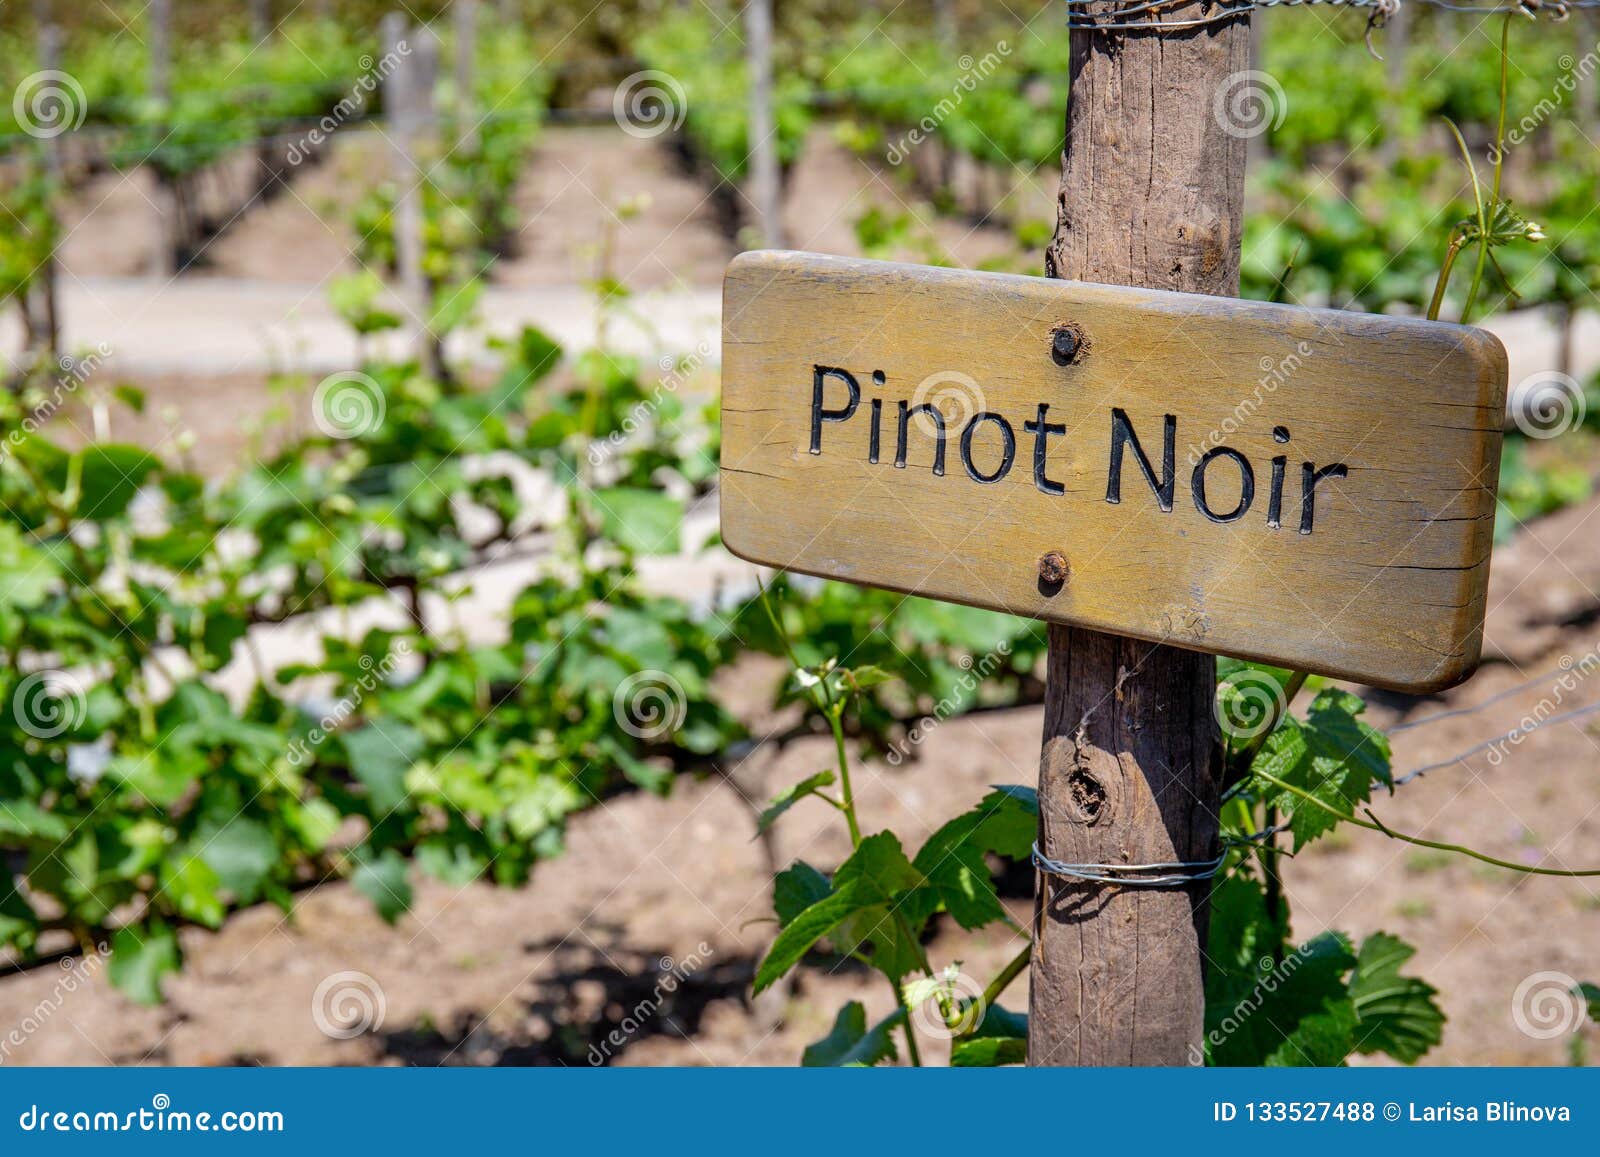 pinot noir wine sign on vineyard. vineyard landcape